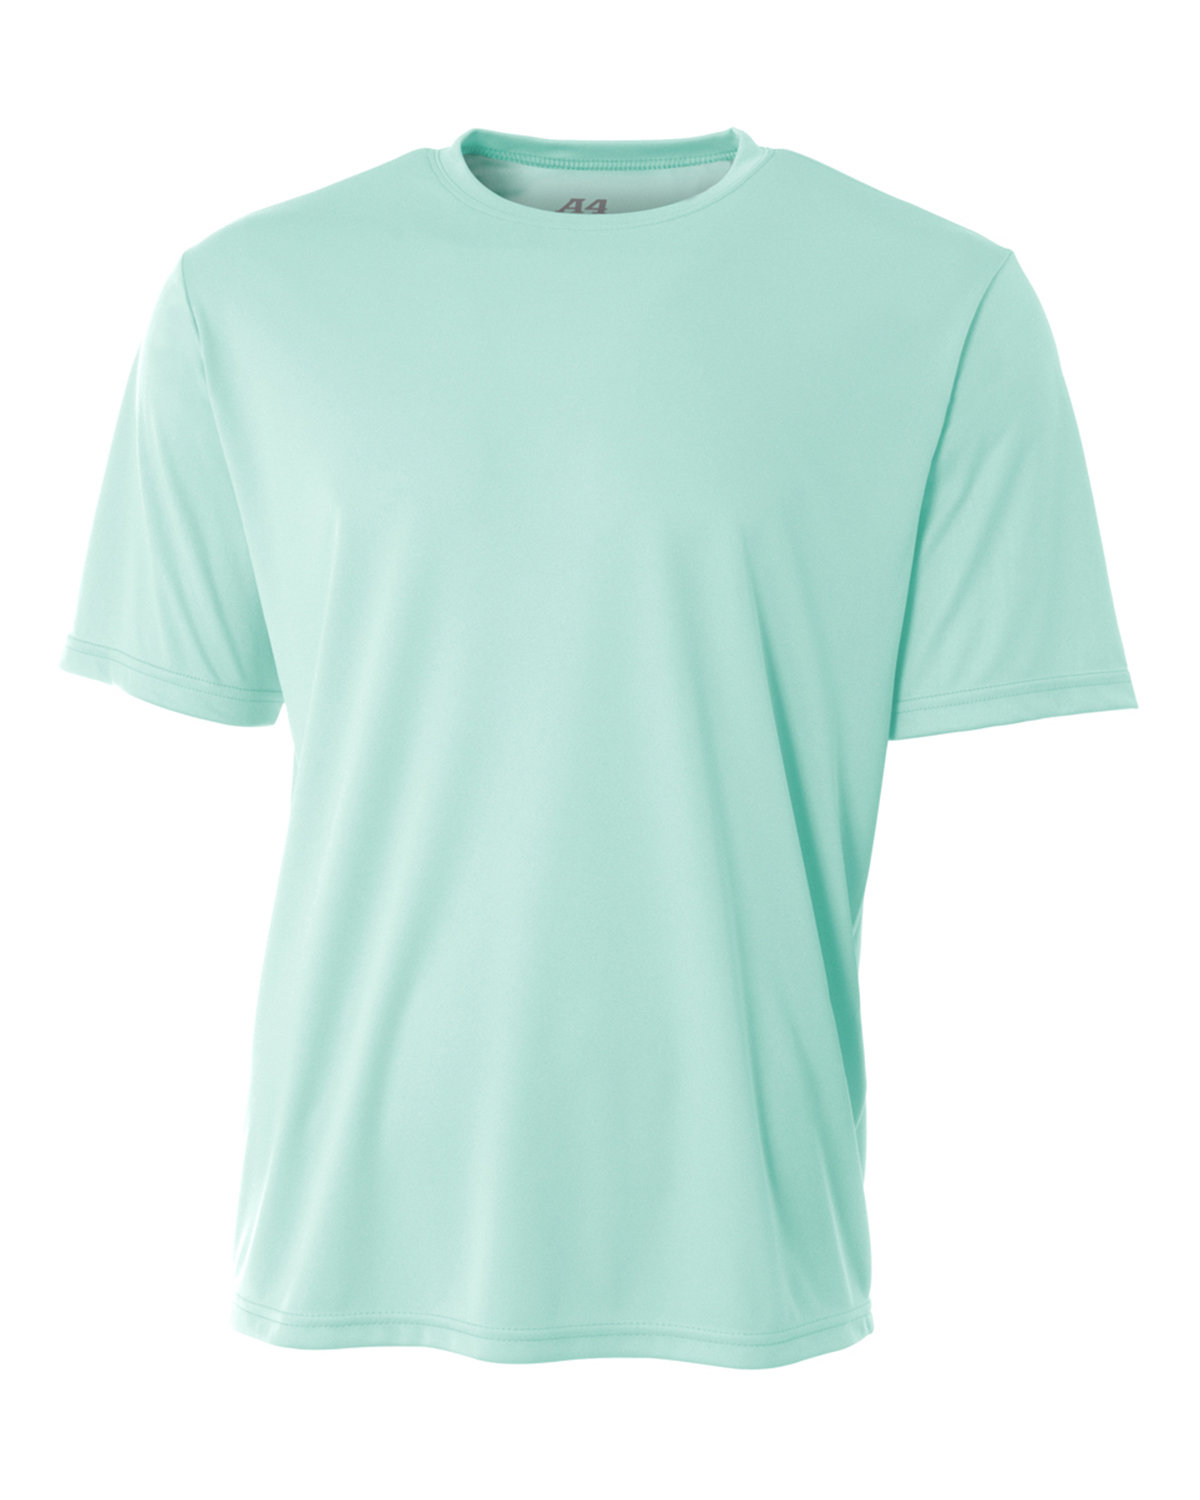 A4 Men's Cooling Performance T-Shirt PASTEL MINT 